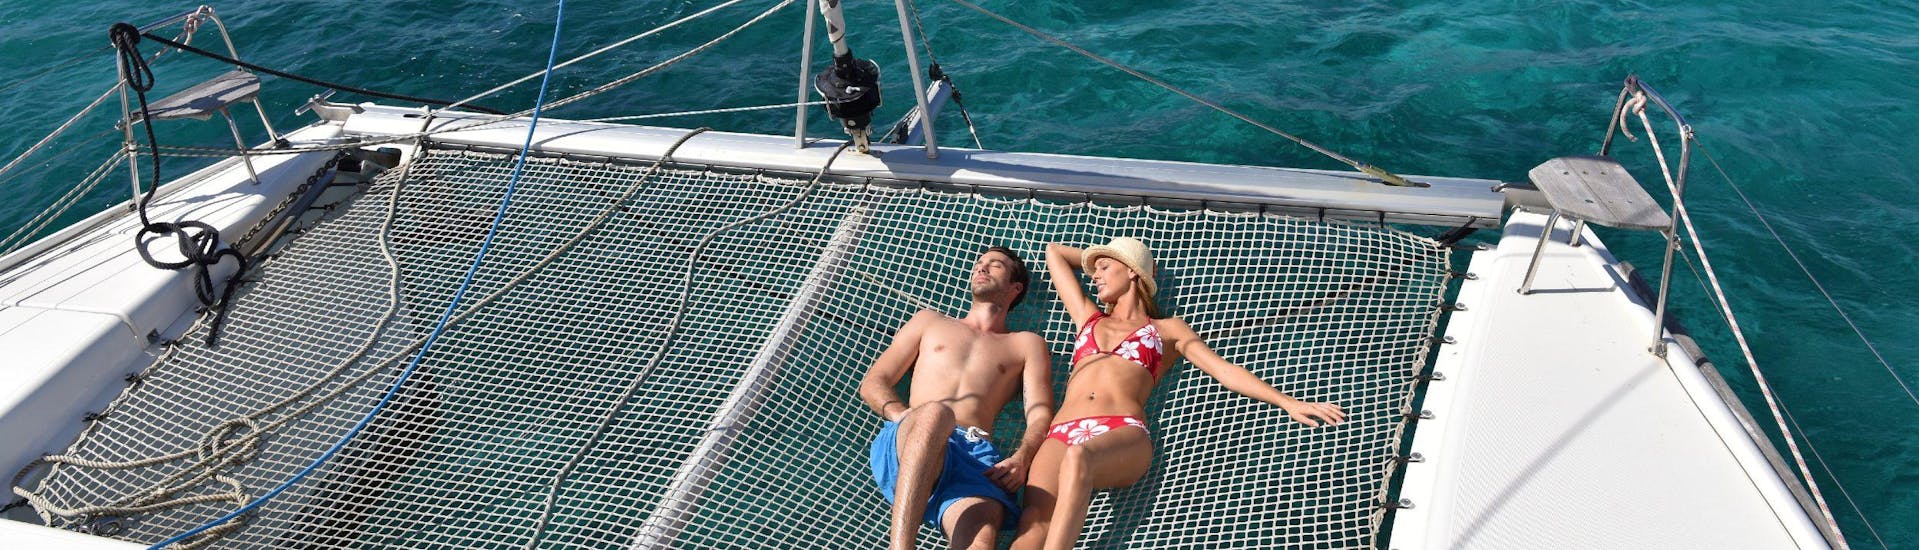 A couple is sunbathing on a catamaran.